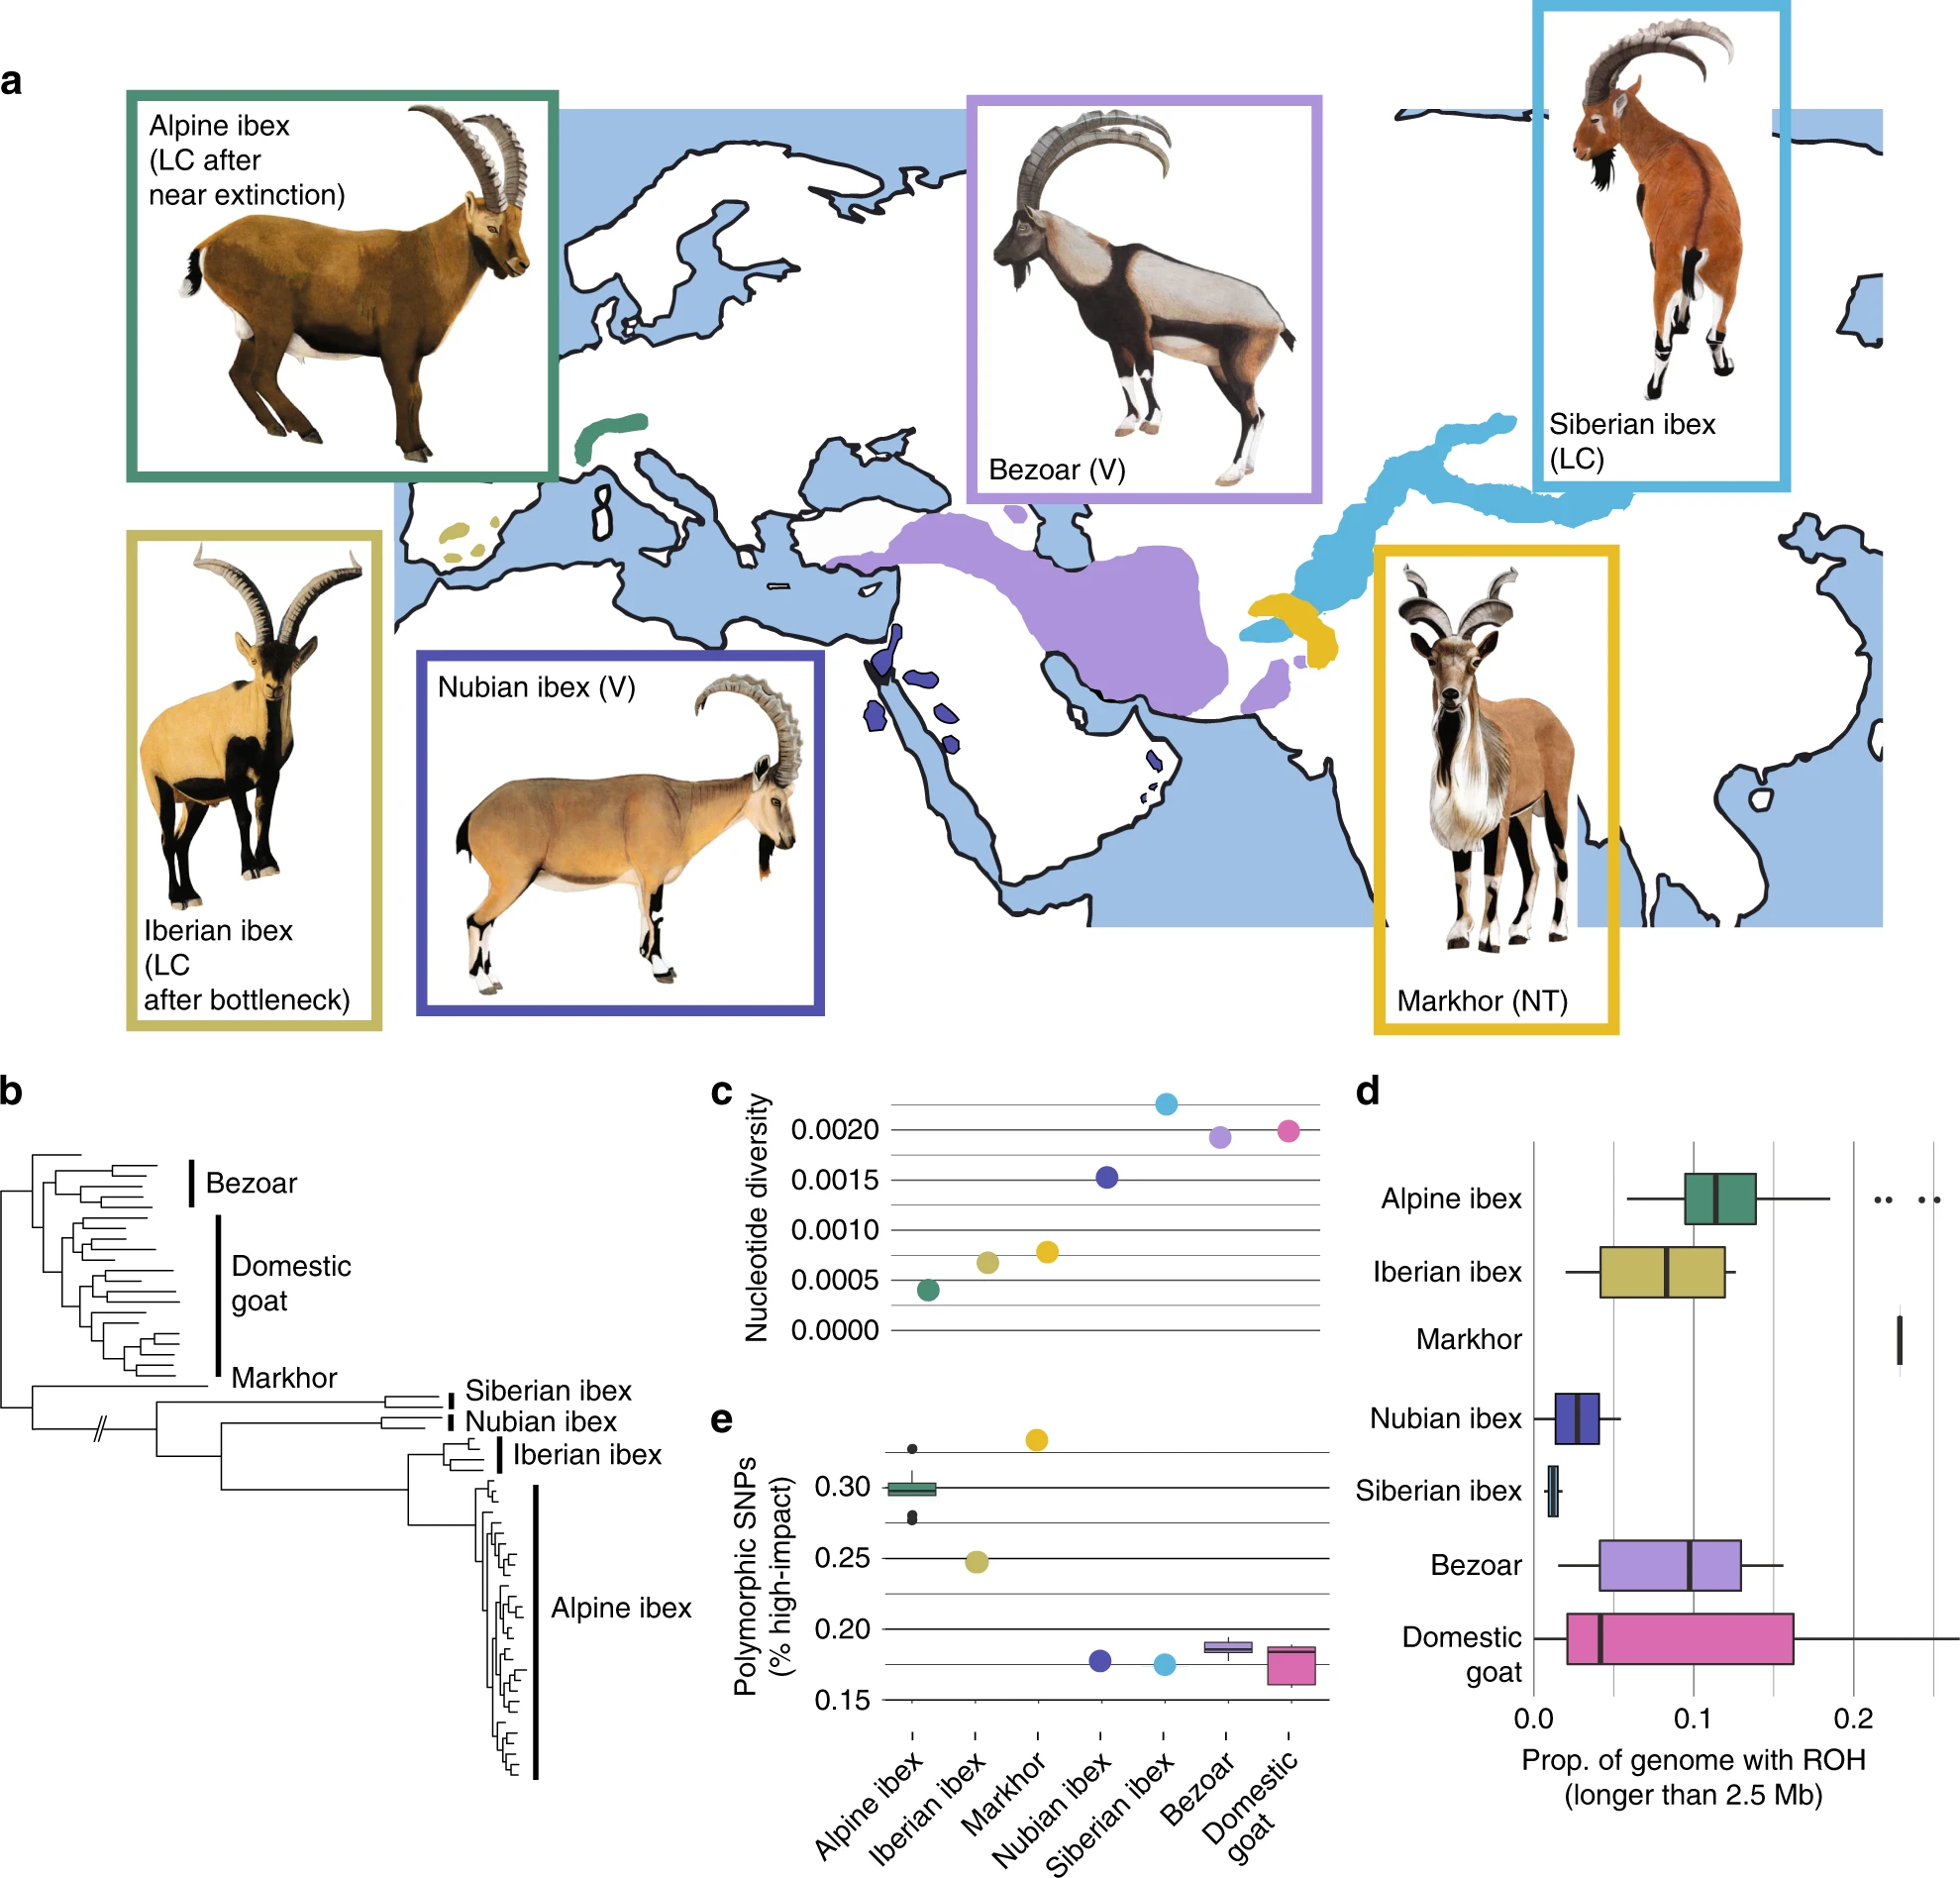 Purging of highly deleterious mutations through severe bottlenecks in Alpine ibex